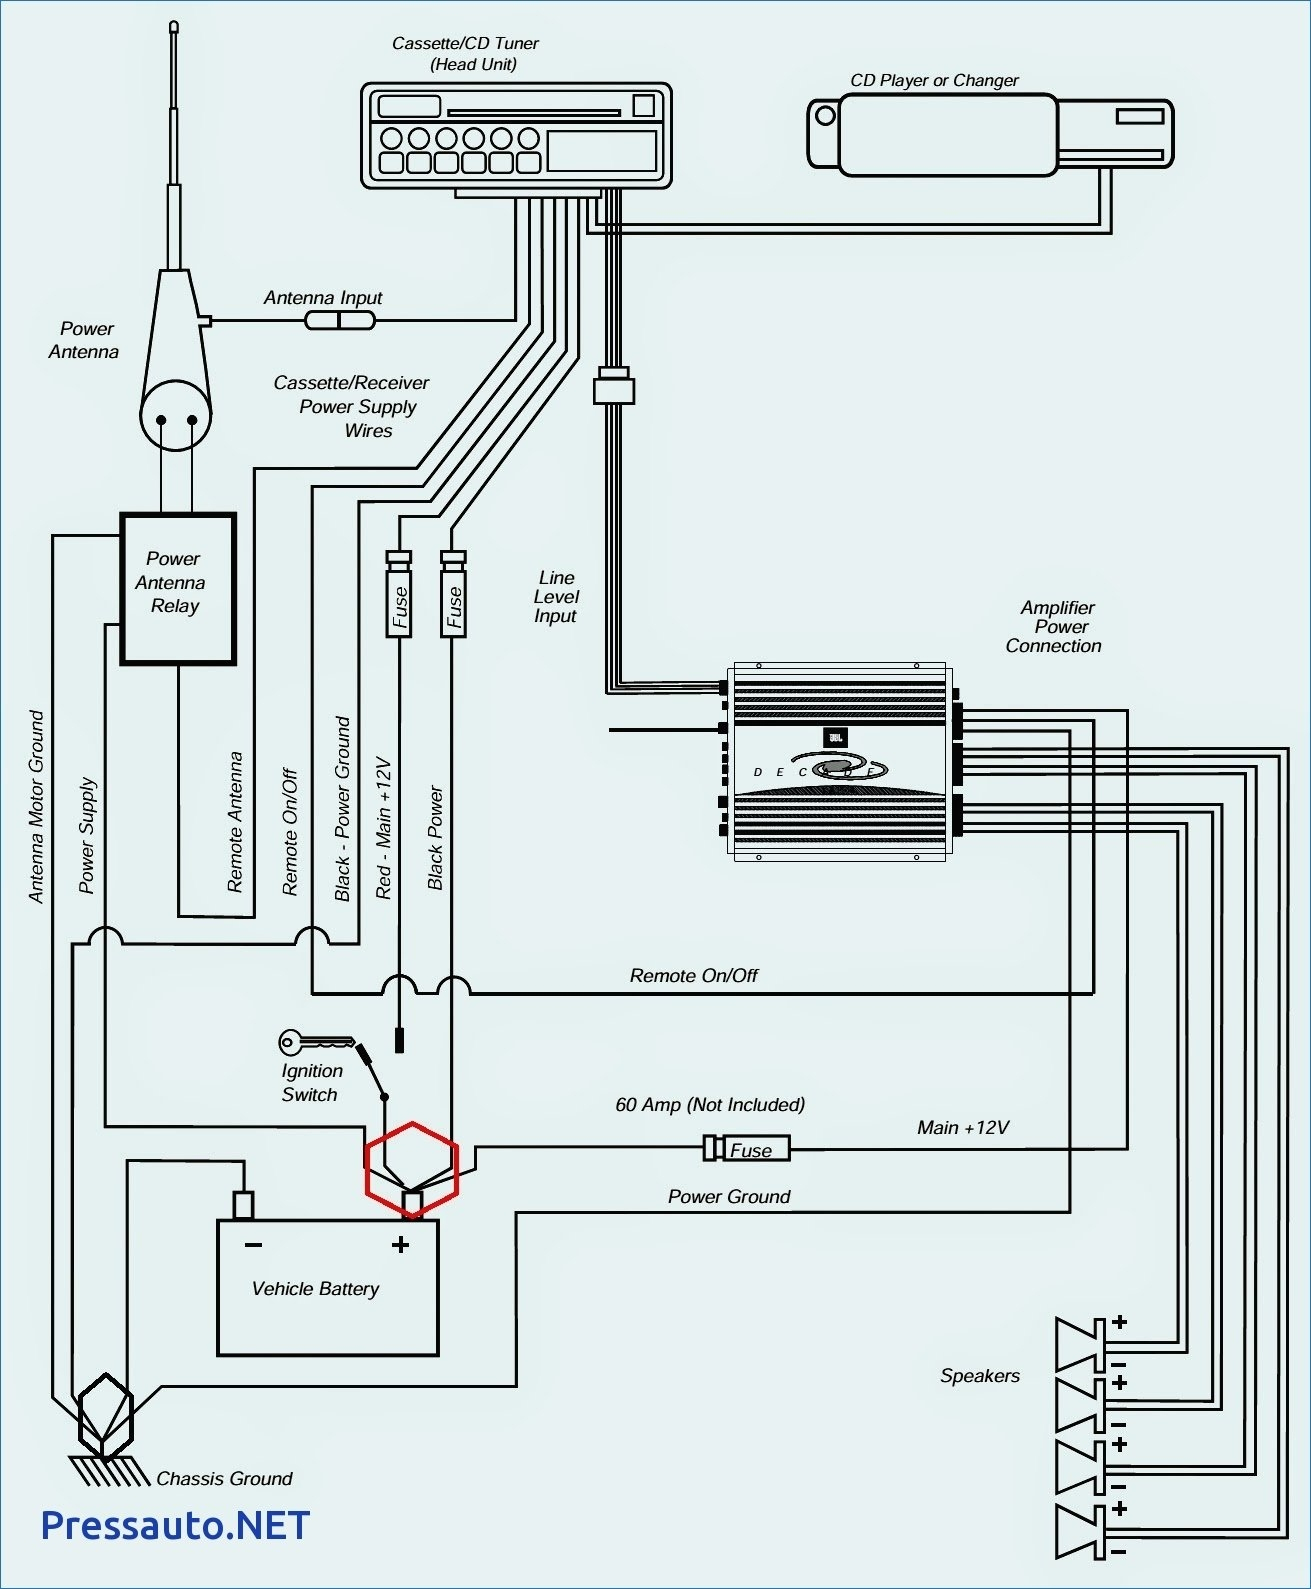 Alpine Ktp 445 Wiring Diagram | Wiring Diagram - Alpine Ktp 445 Wiring Diagram